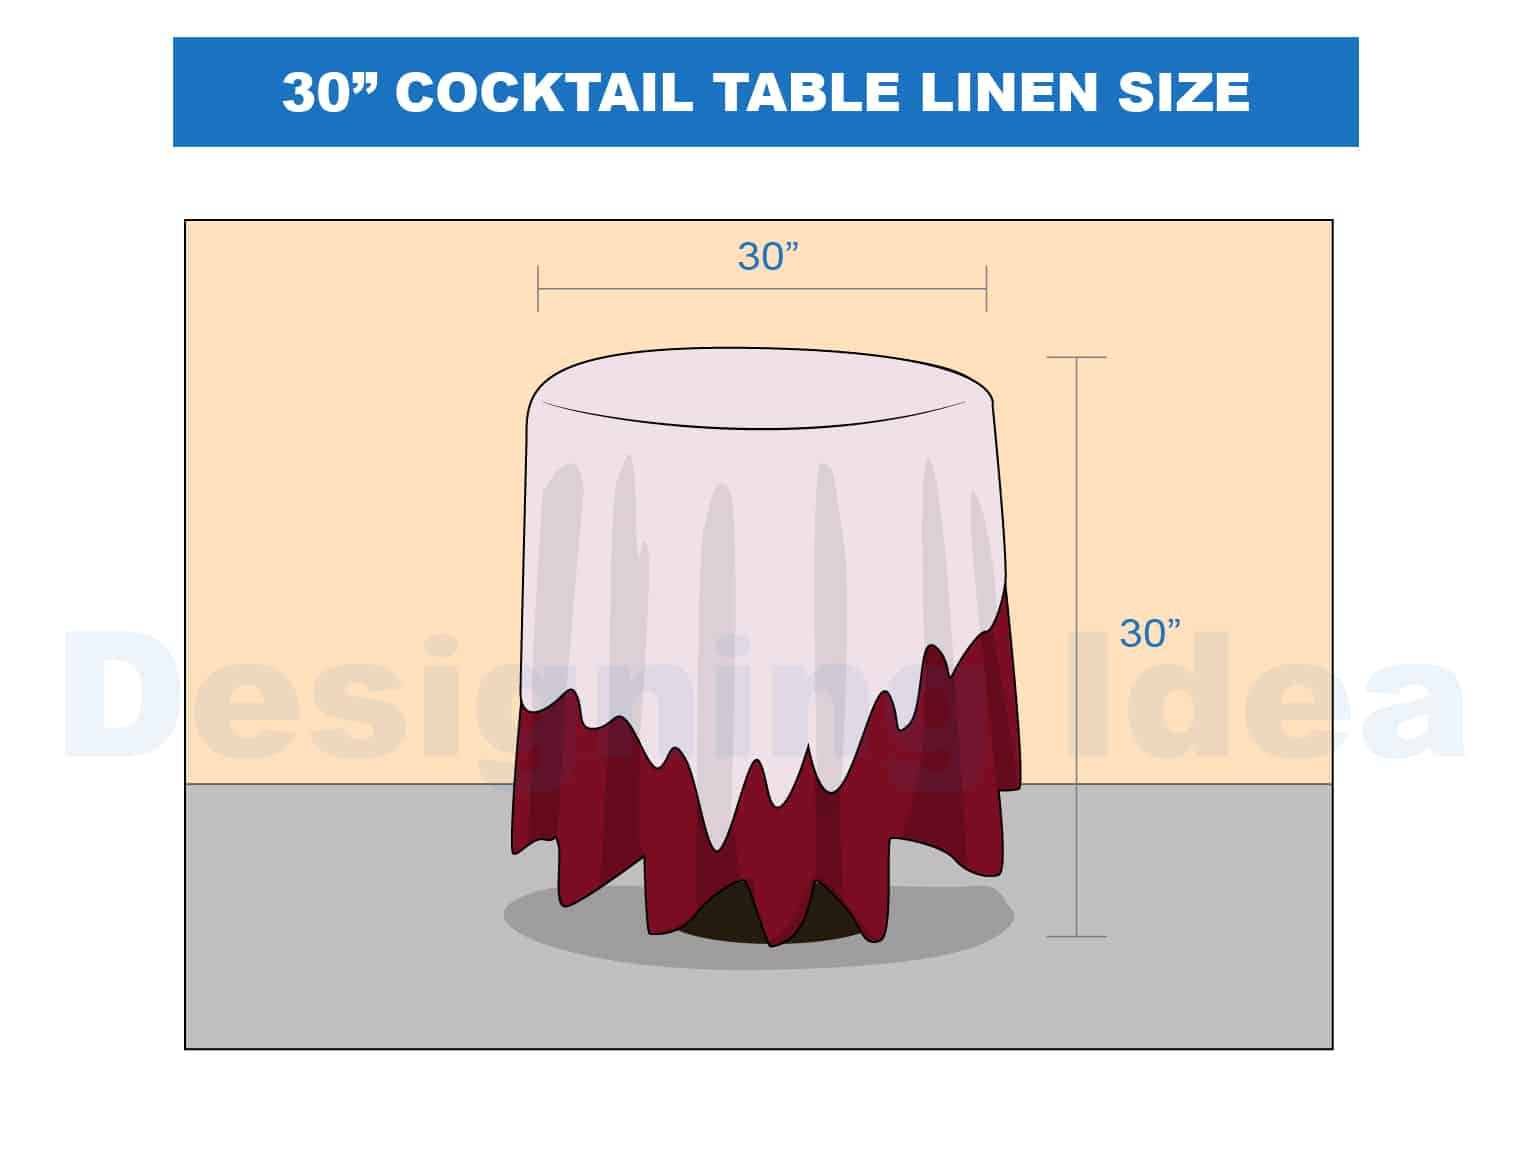 30” cocktail table linen size